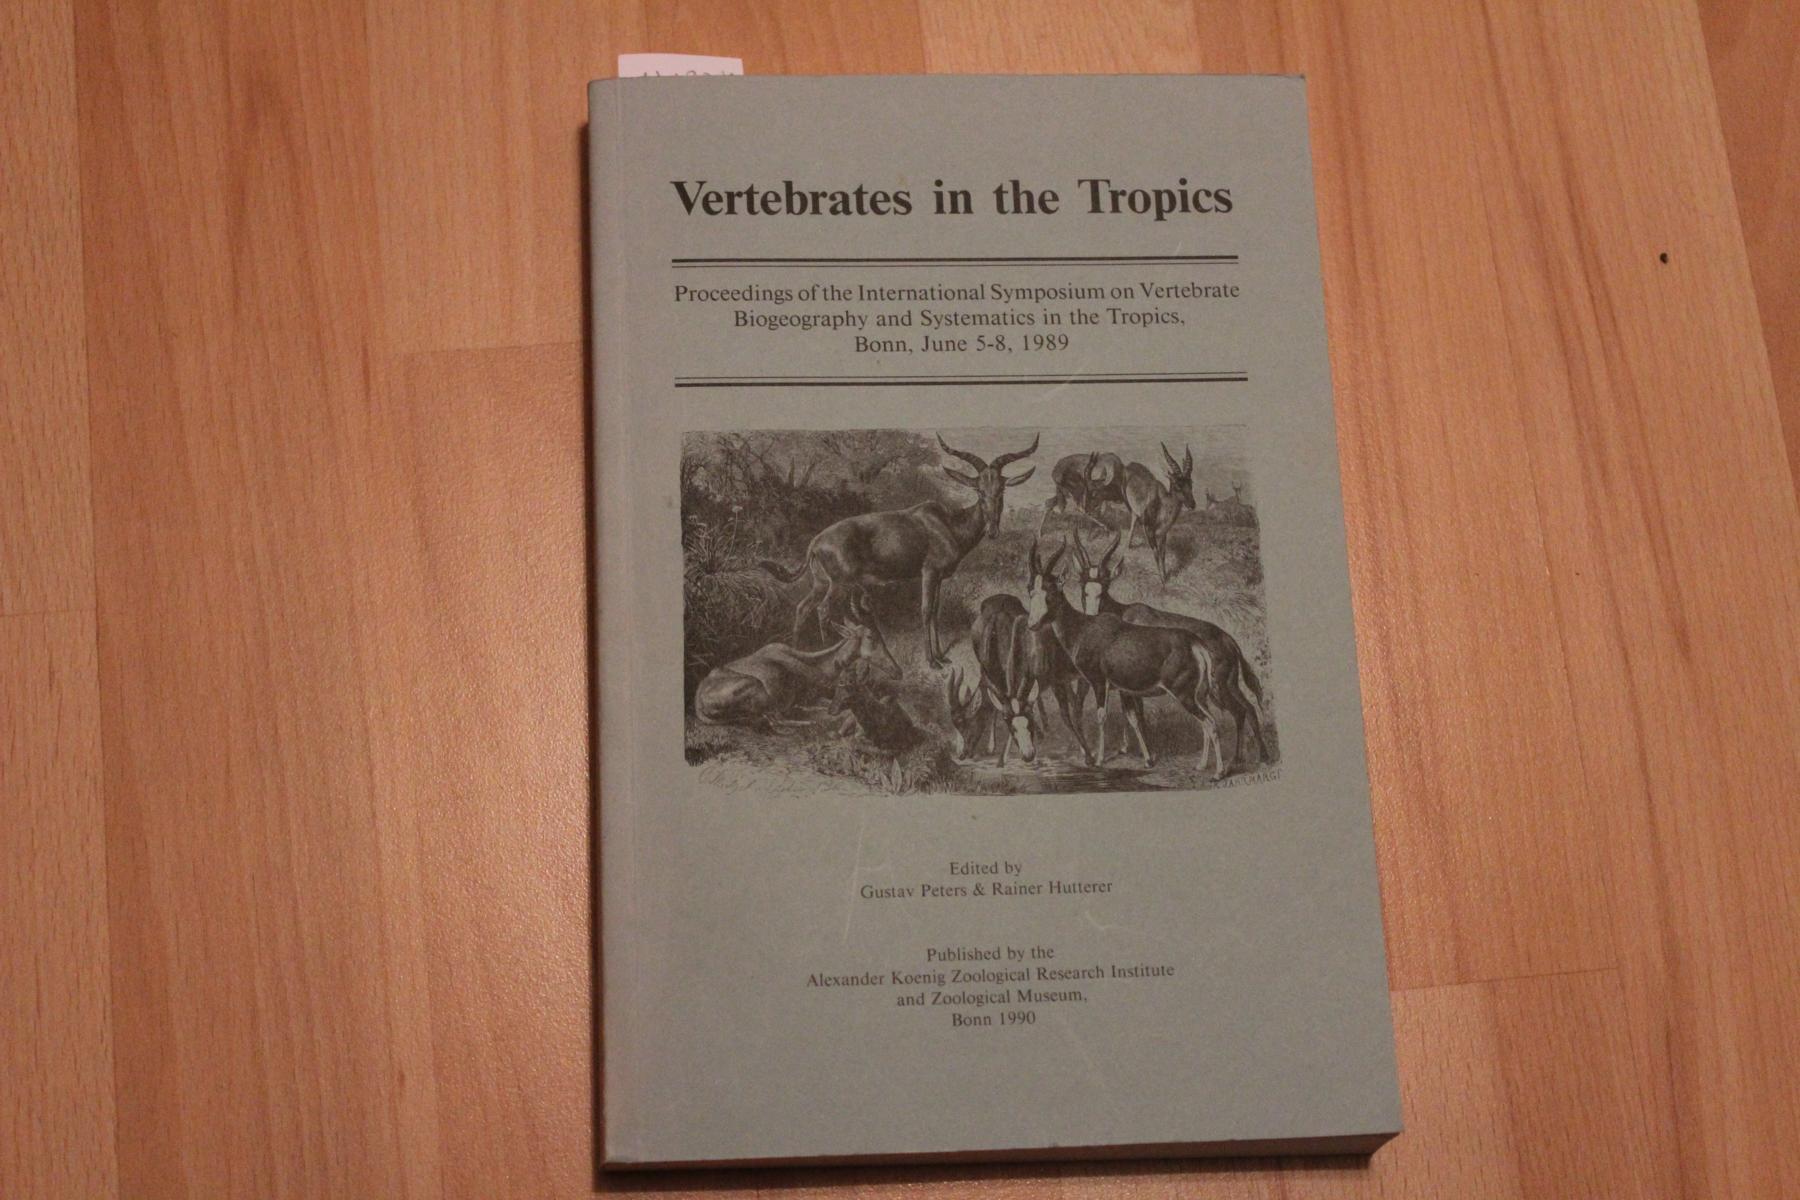 Vertebrates in the Tropics. Proceedings of the International Symposium on Vertebrate Biogeography and Systematics in the Tropics, Bonn, June 5-8, 1989. - Peters, Gustav; Hutterer, Rauner